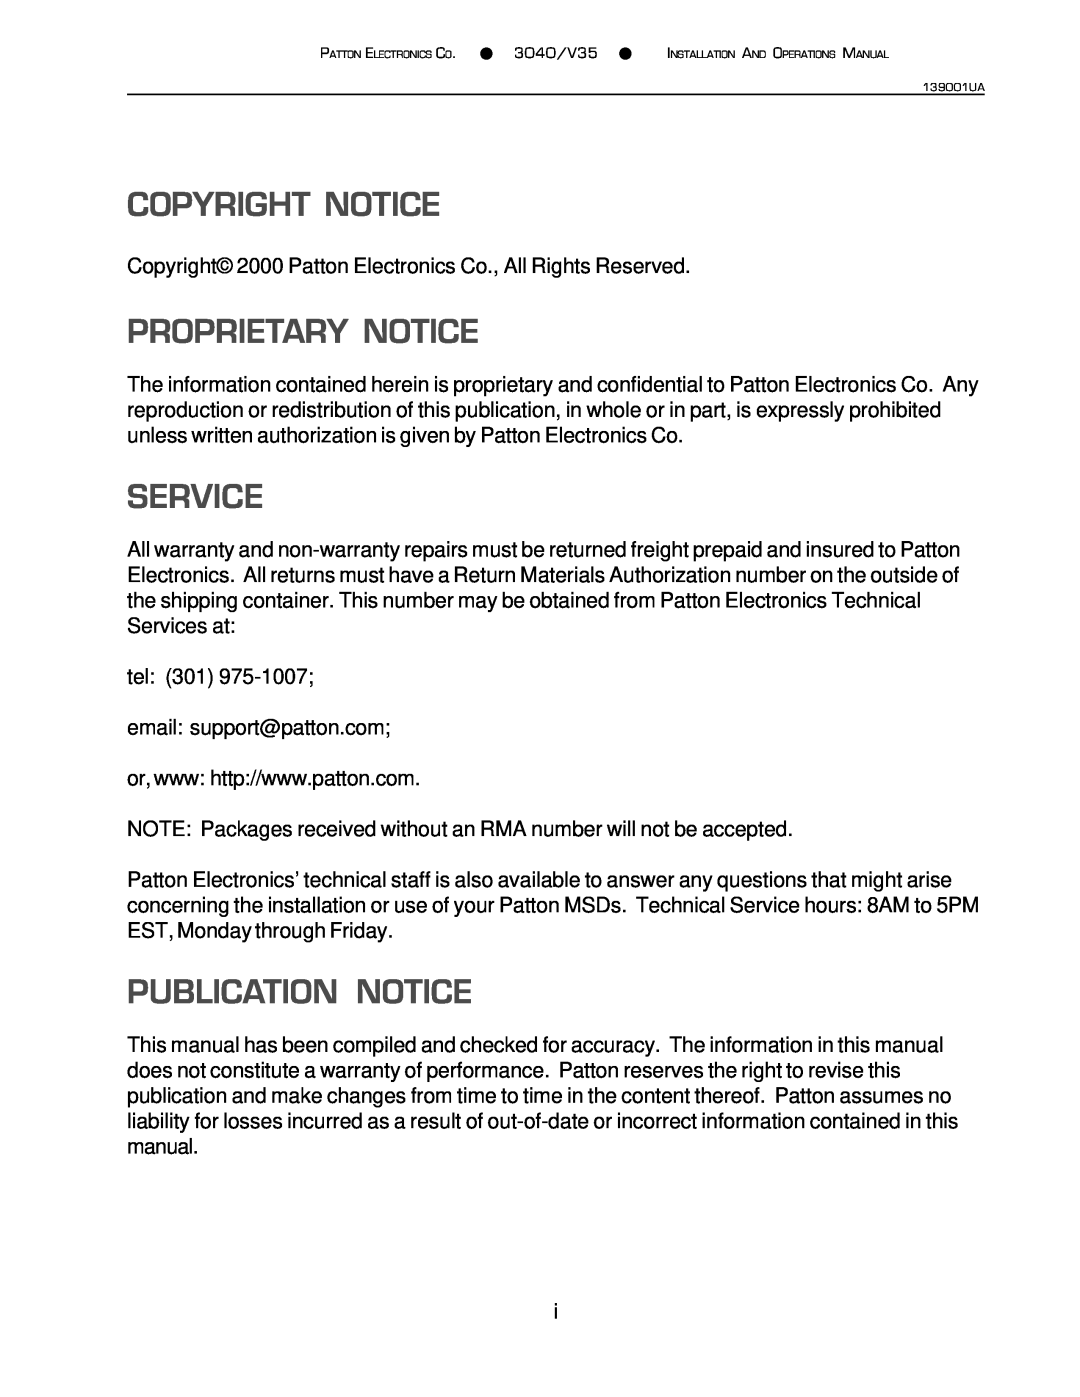 Patton electronic 3040/V35 manual Copyright Notice, Proprietary Notice, Service, Publication Notice 